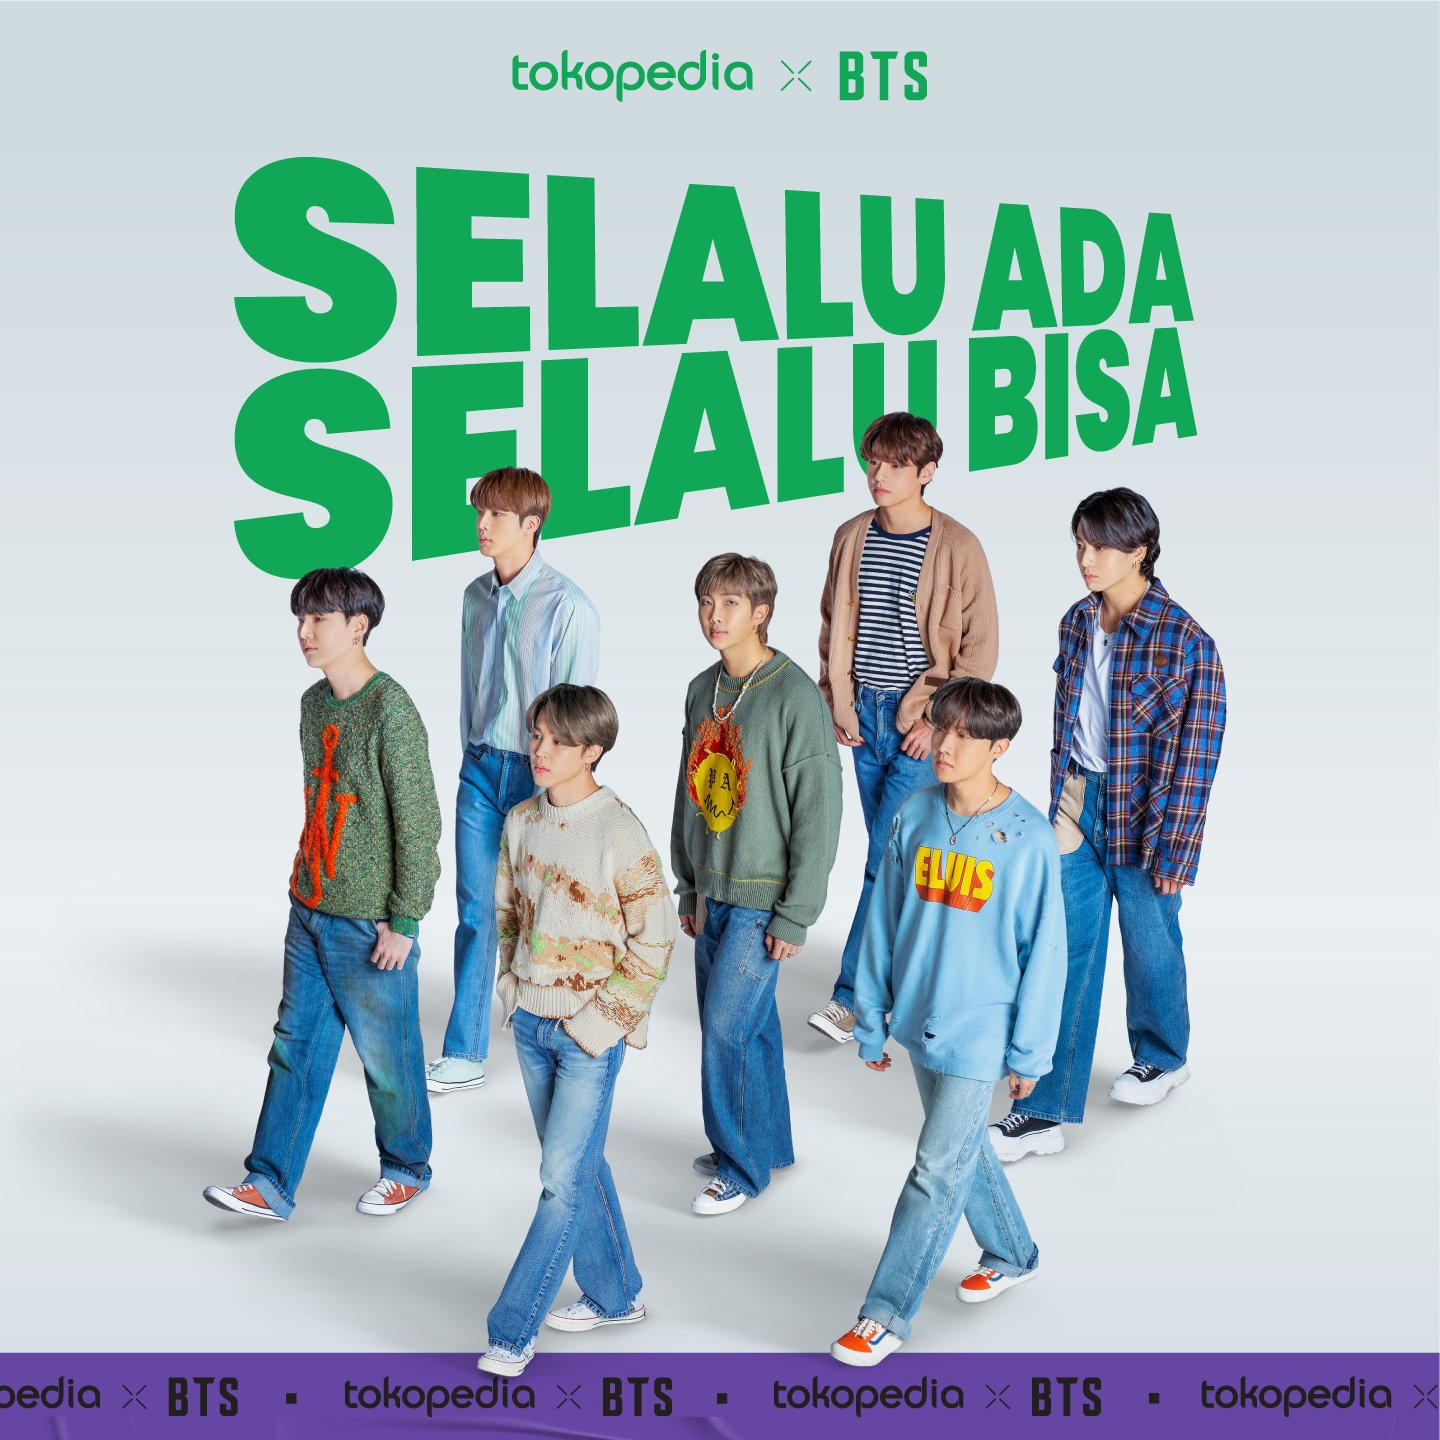 K-pop sensation BTS named Tokopedia brand ambassador - Entertainment - The  Jakarta Post